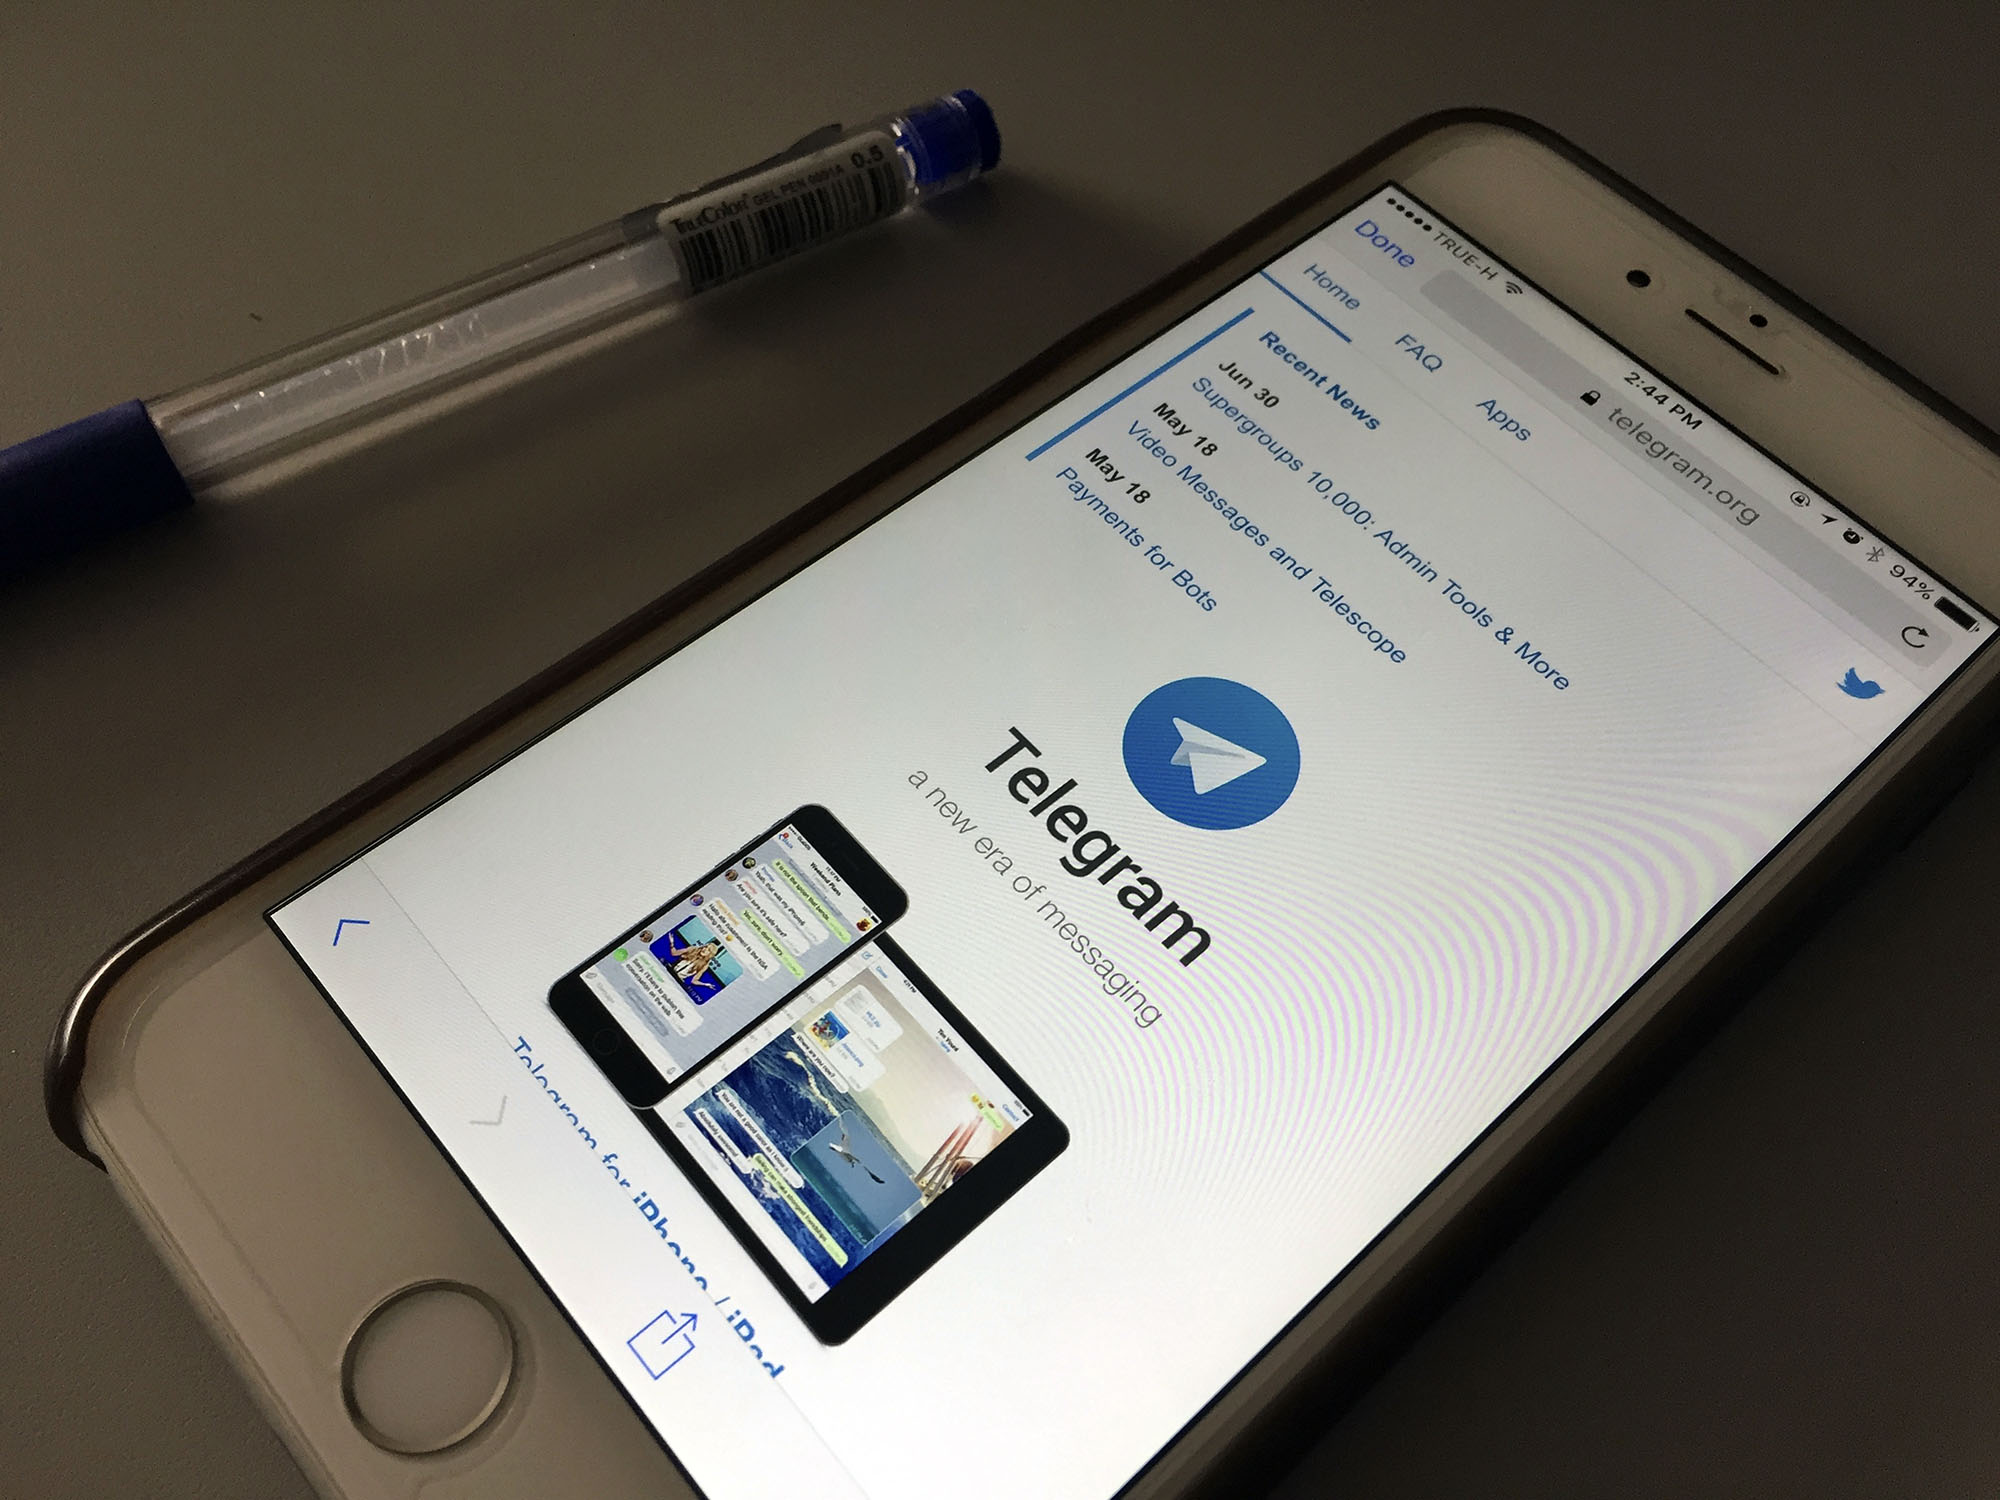 The Telegram app, open on a smartphone.